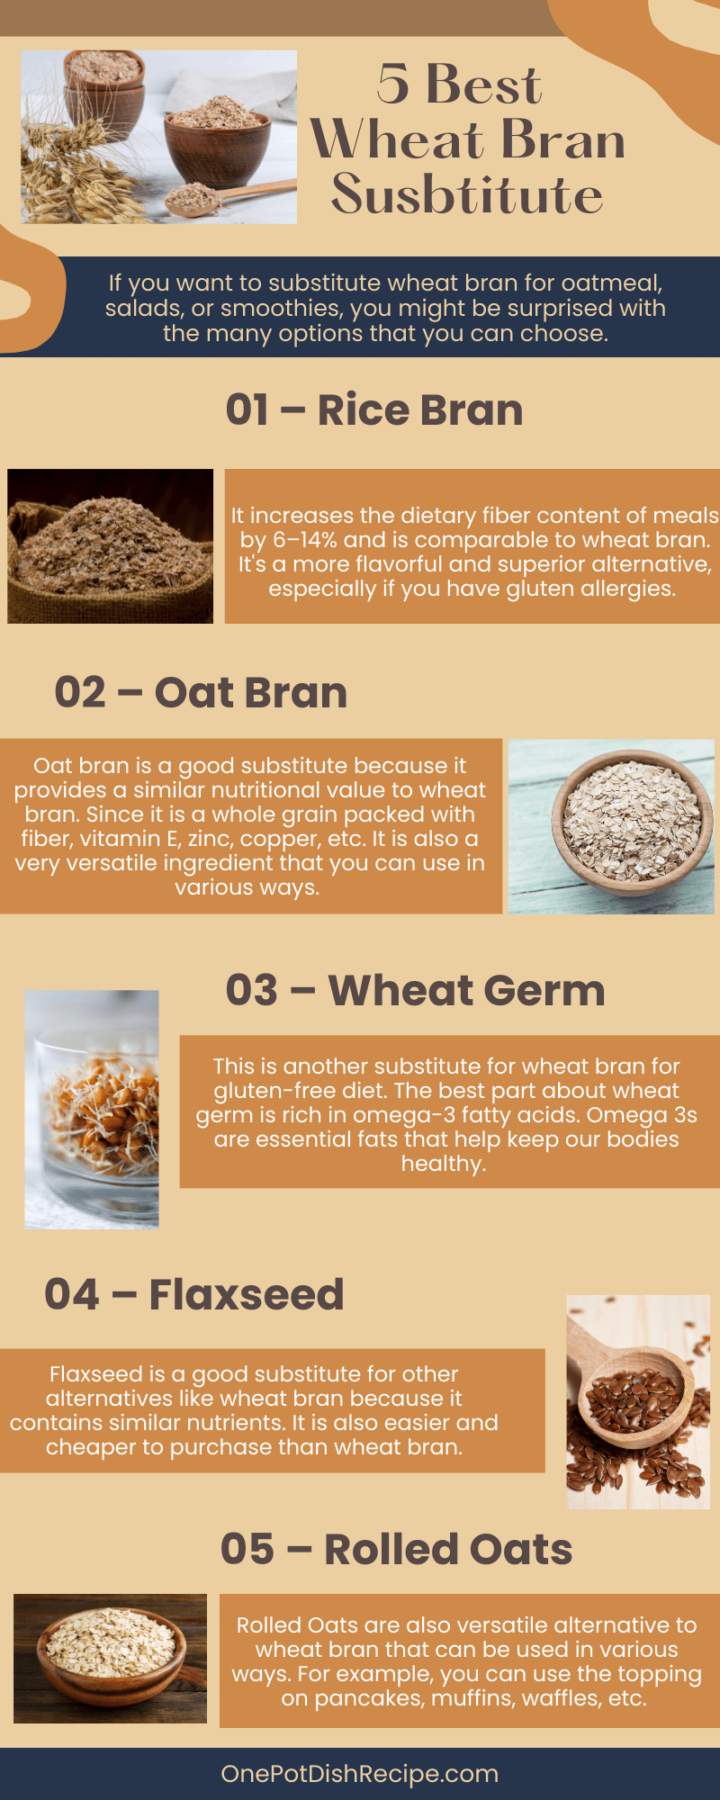 Wheat Bran Substitutes - Top Choices